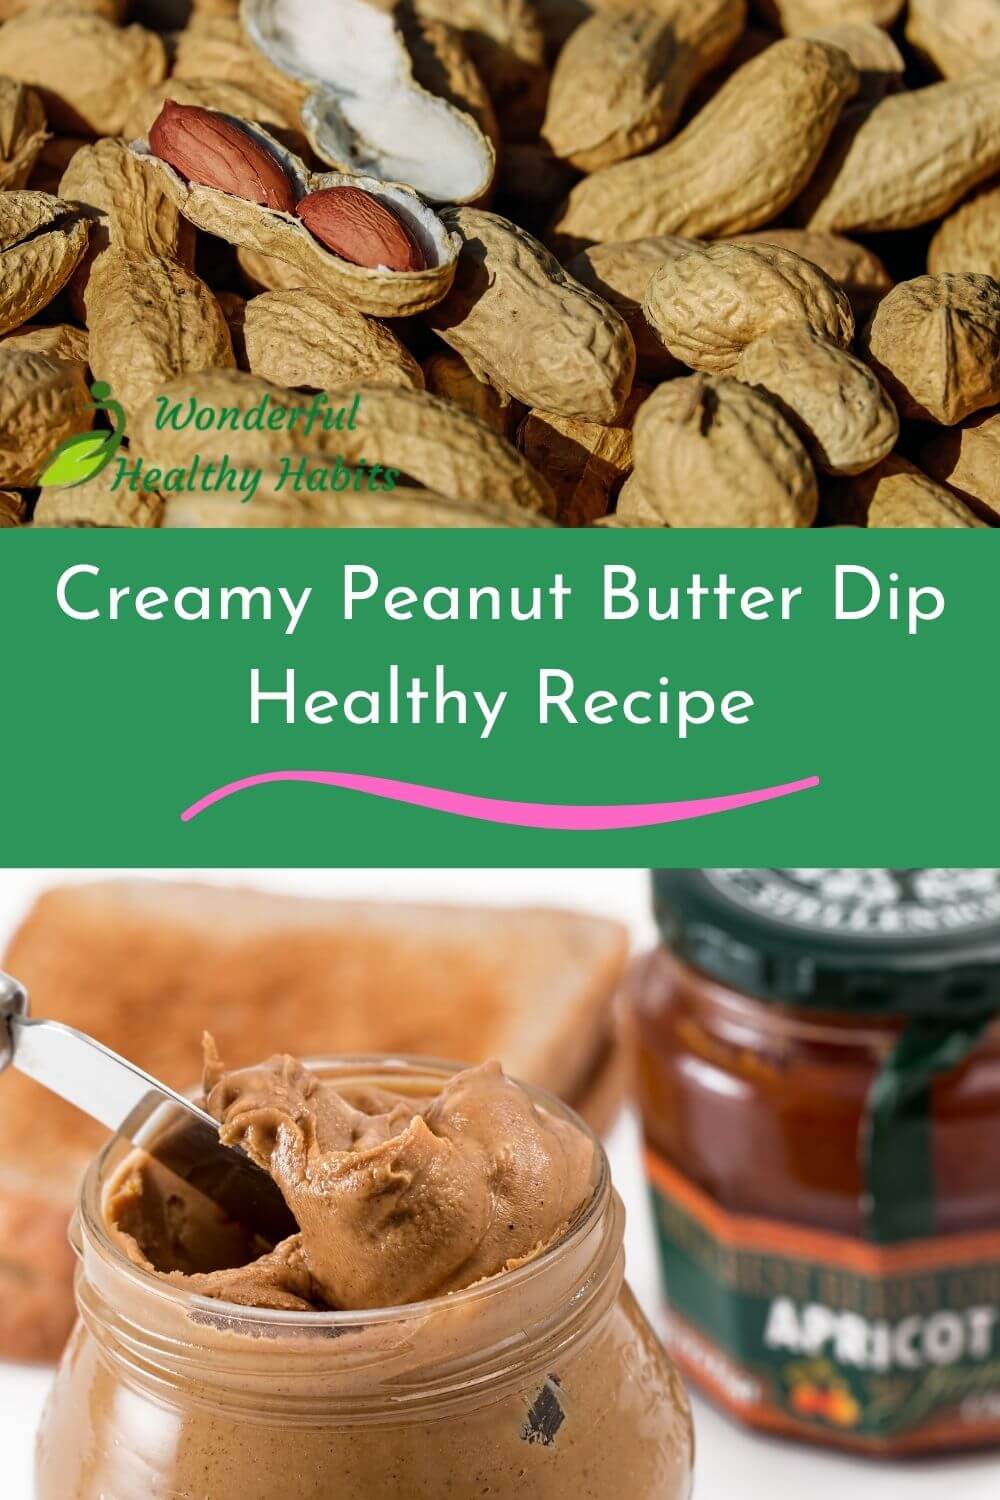 Creamy Peanut Butter Dip Healthy Recipe